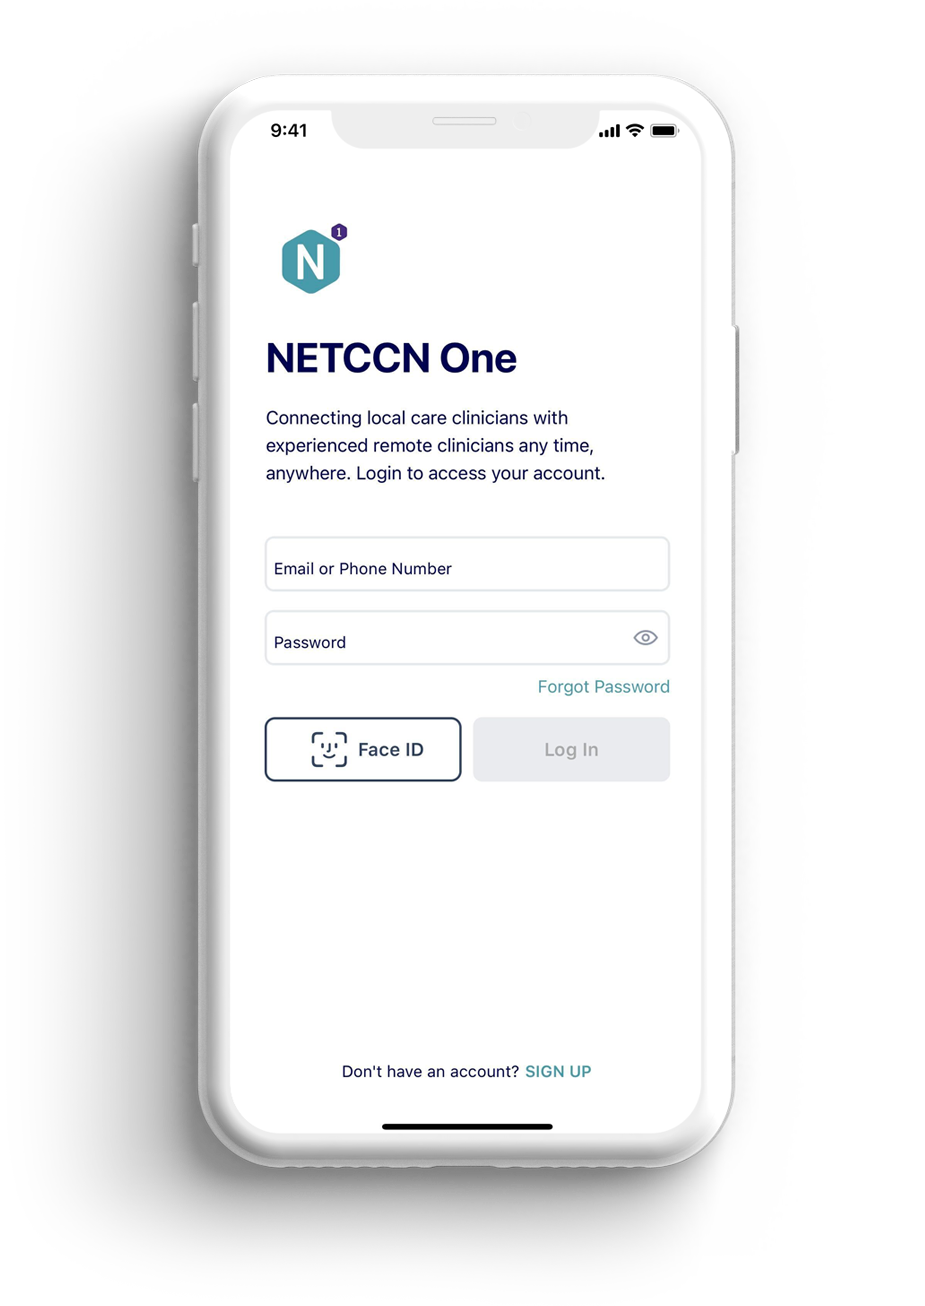 NETCCN One iOS application